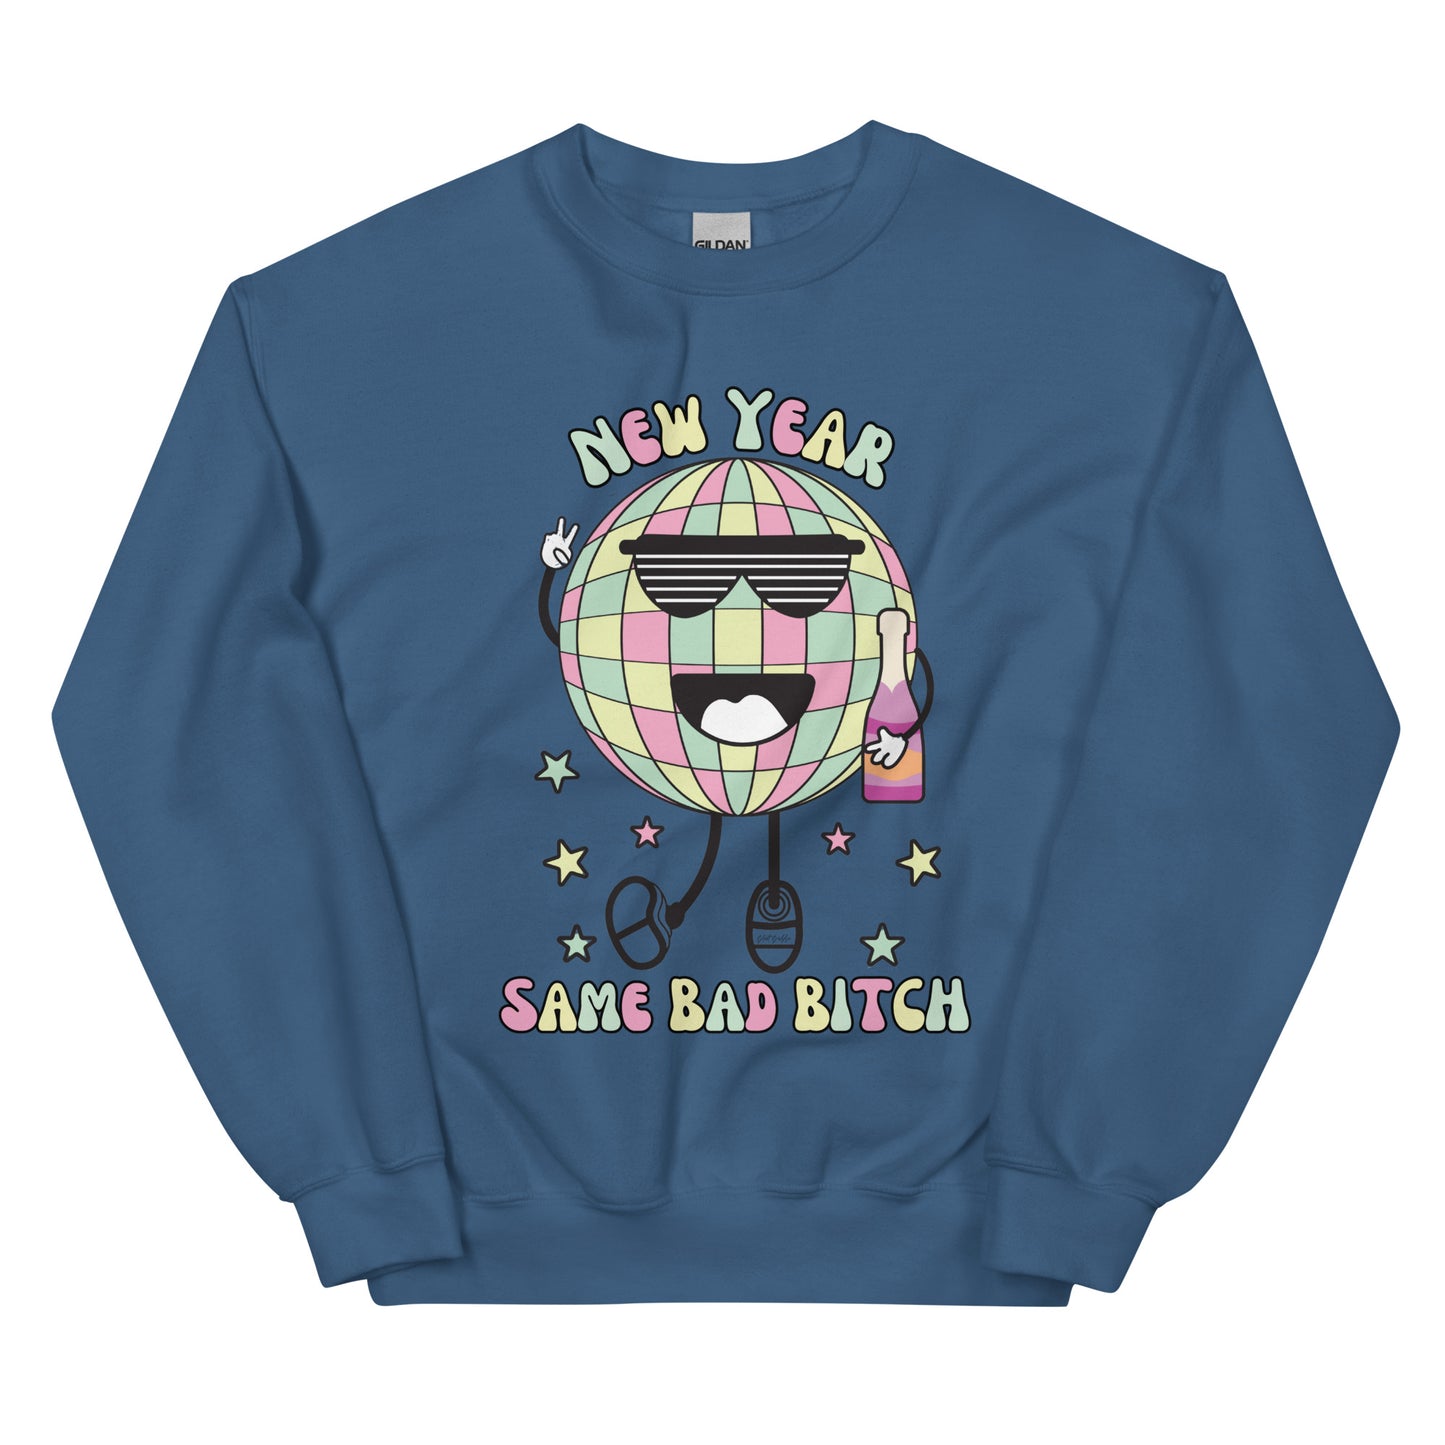 Same Bad Bitch Sweatshirt